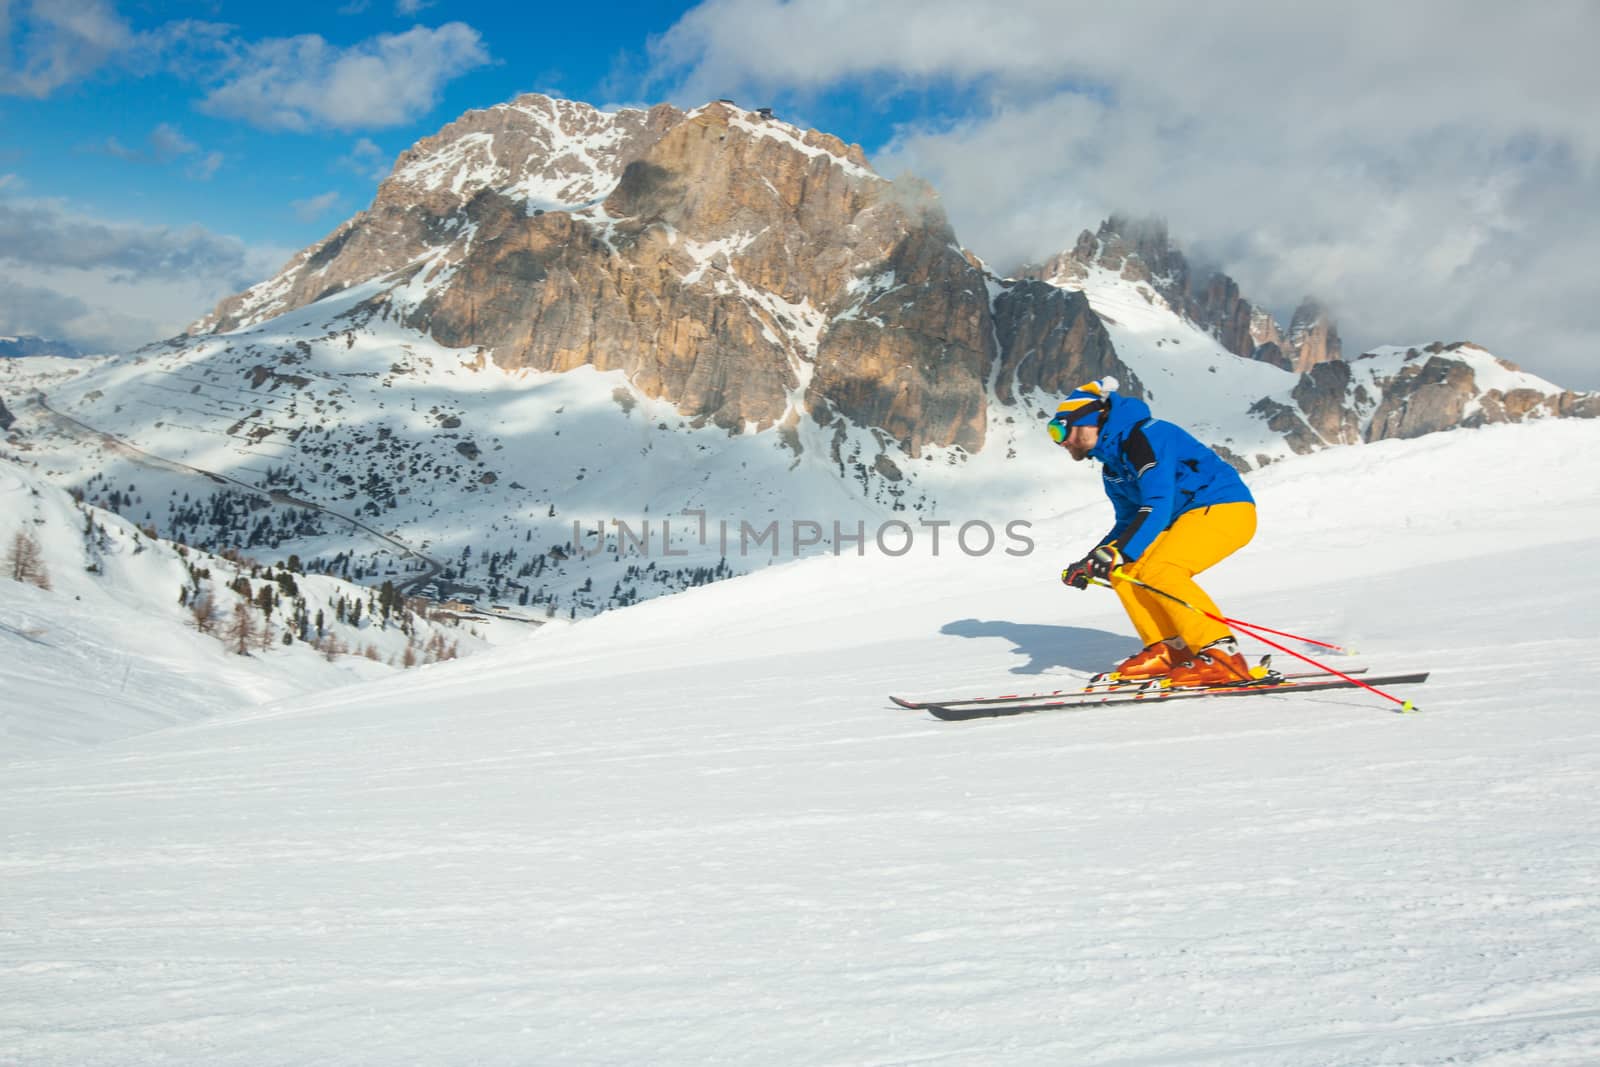 Alpine skier on slope at Cortina by destillat